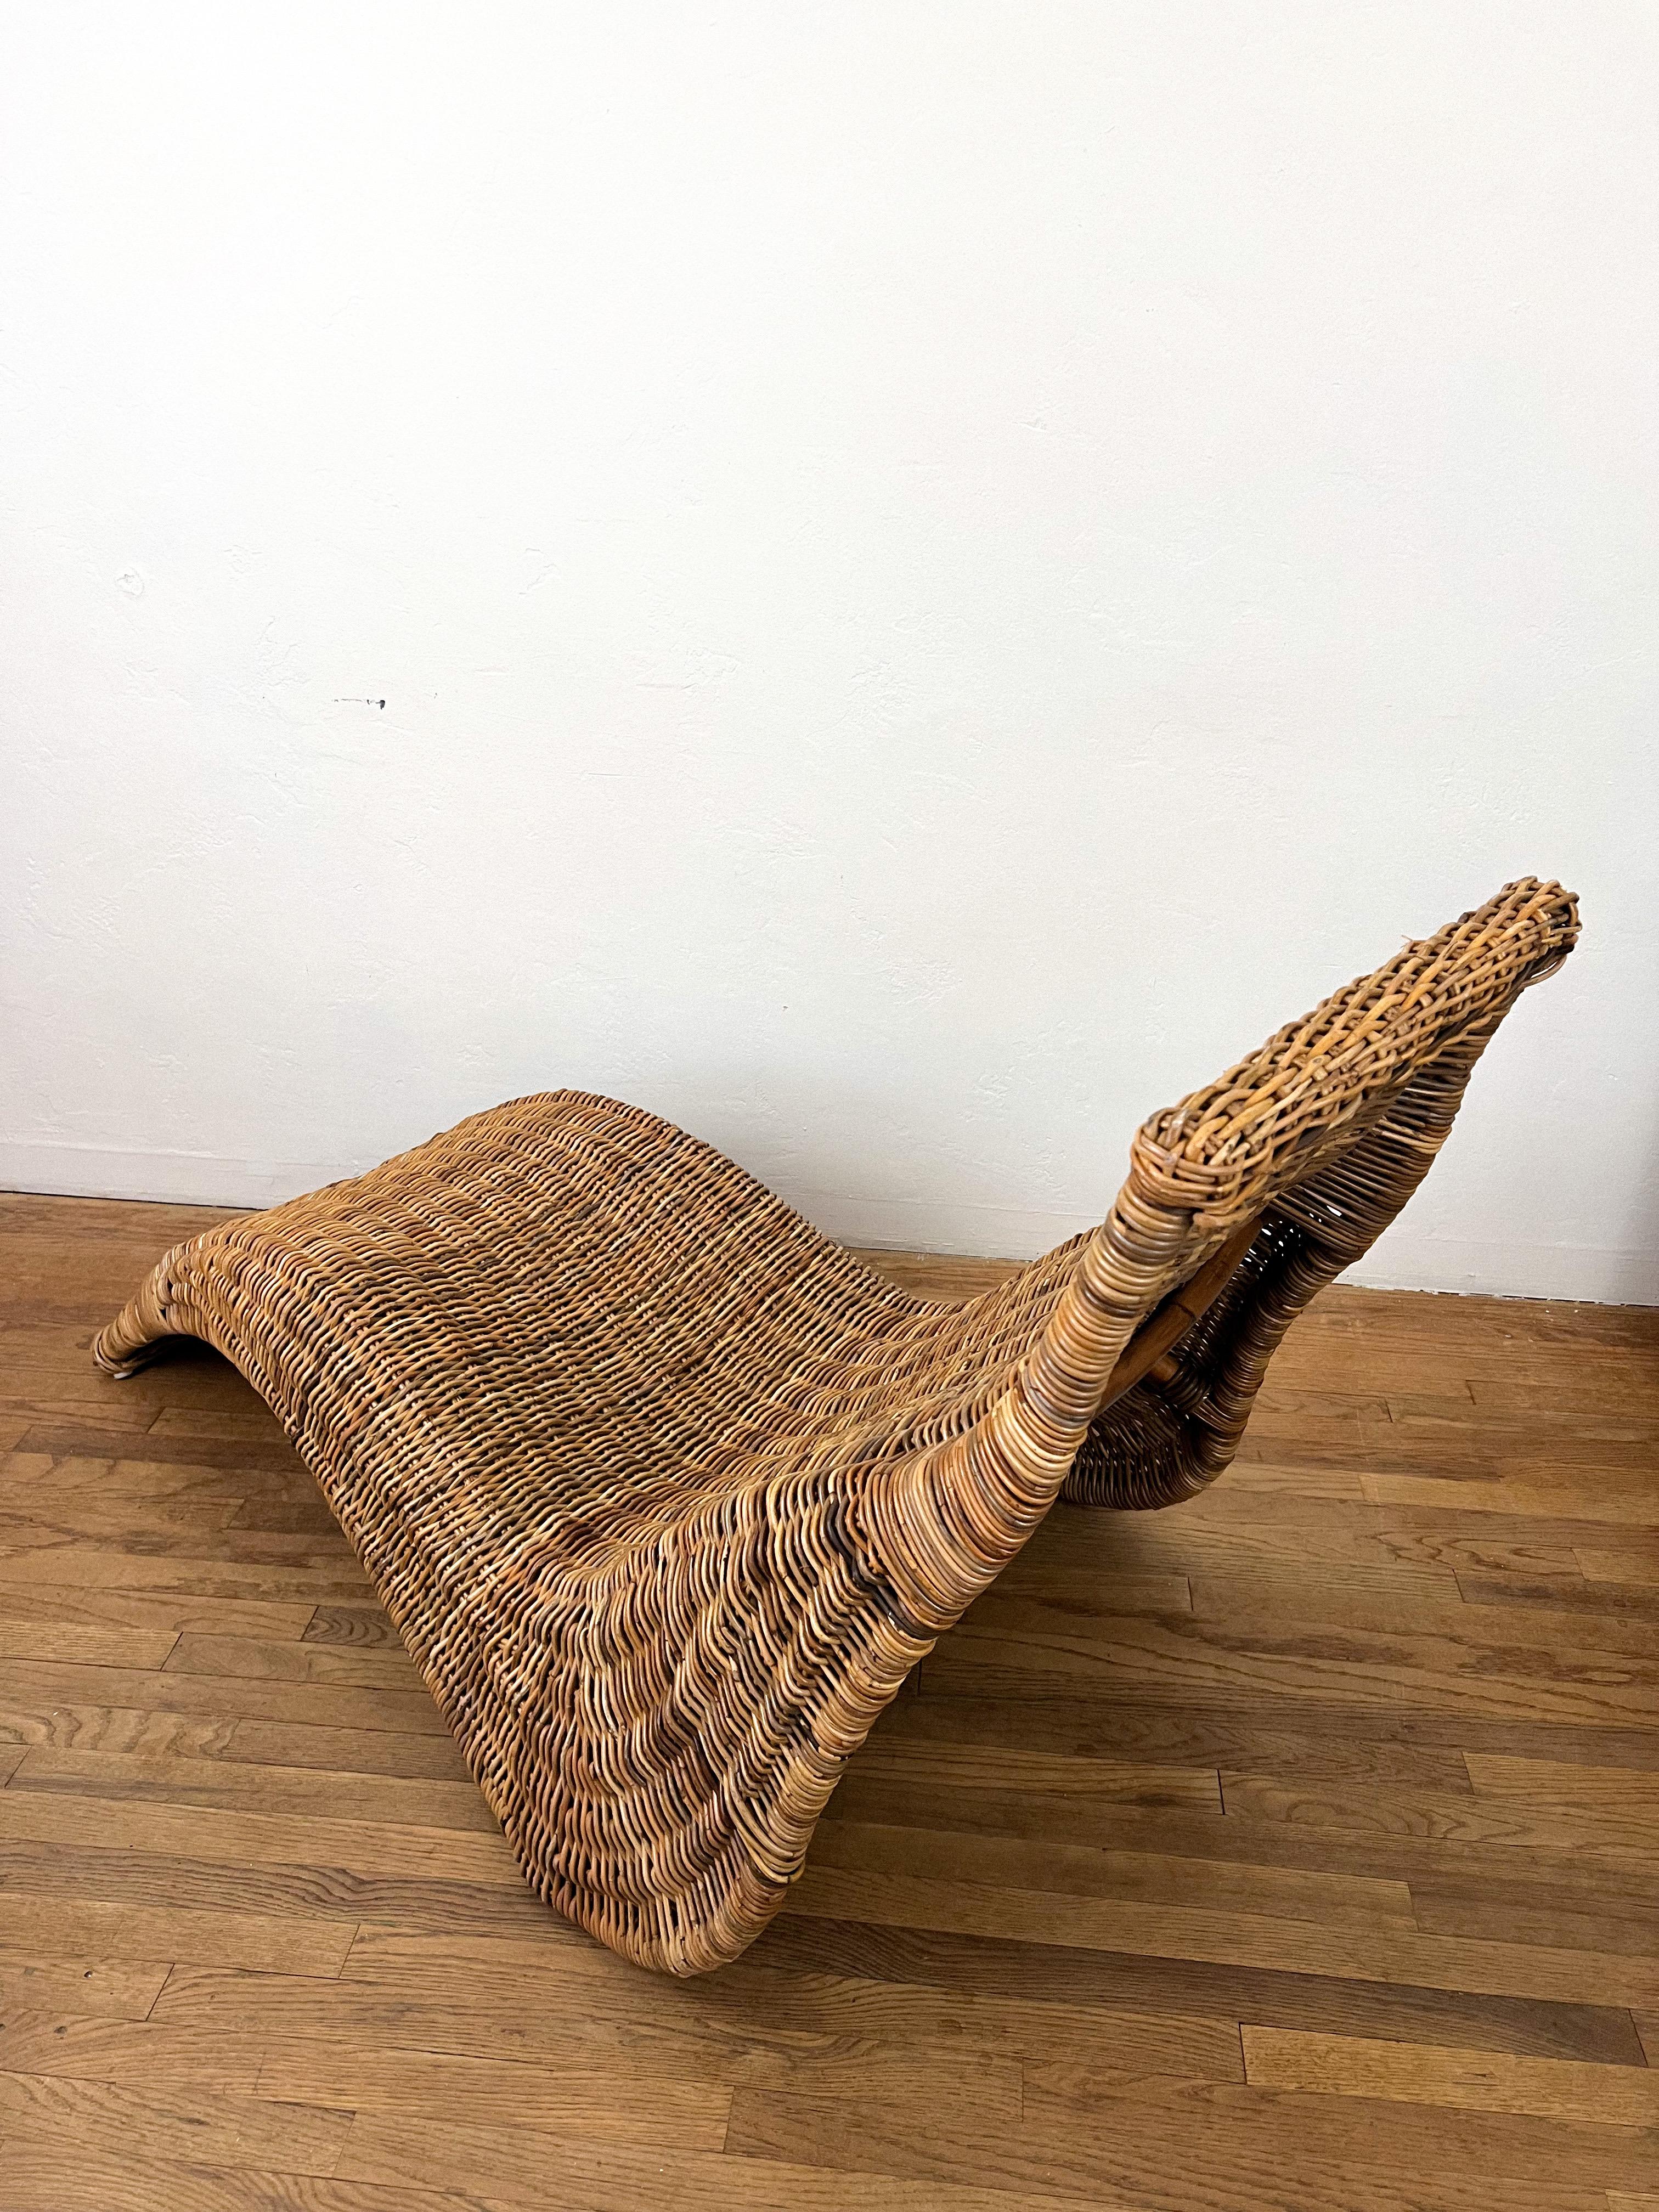 Vintage “Karlskrona” Wicker Lounge Chair by Carl Öjerstam In Good Condition For Sale In La Mesa, CA